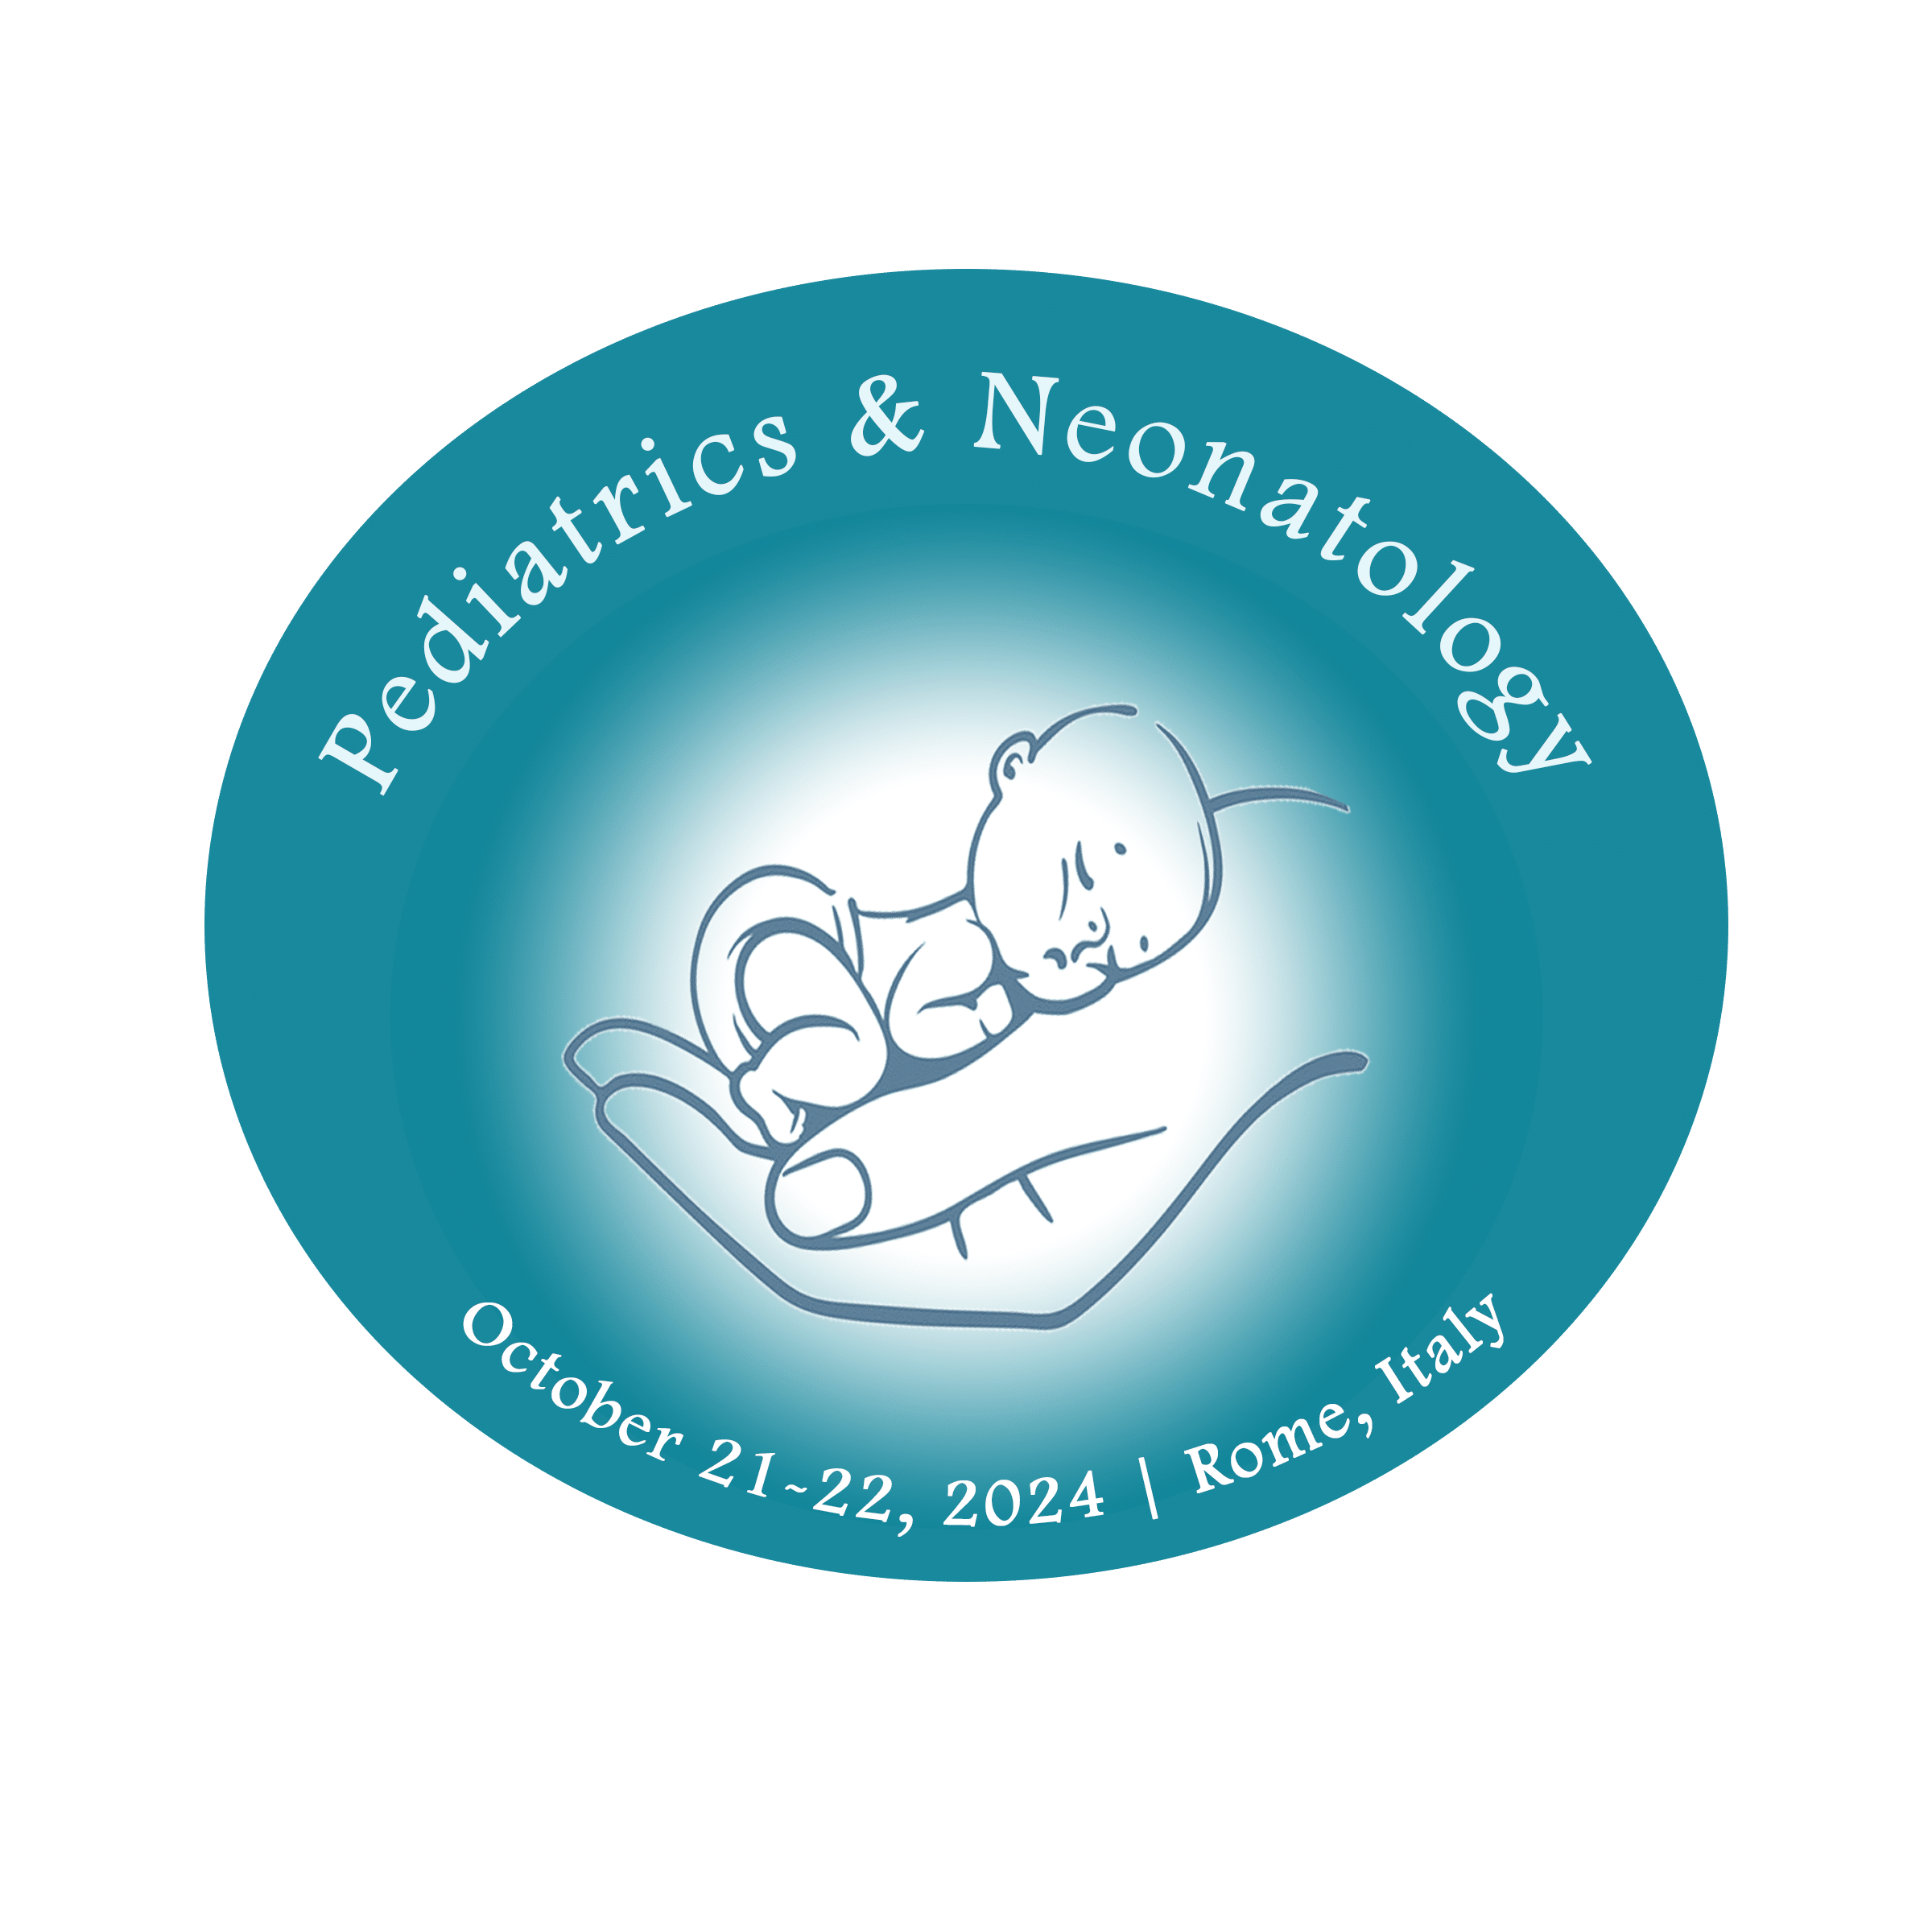 Pedaitrics and Neonatology conferences